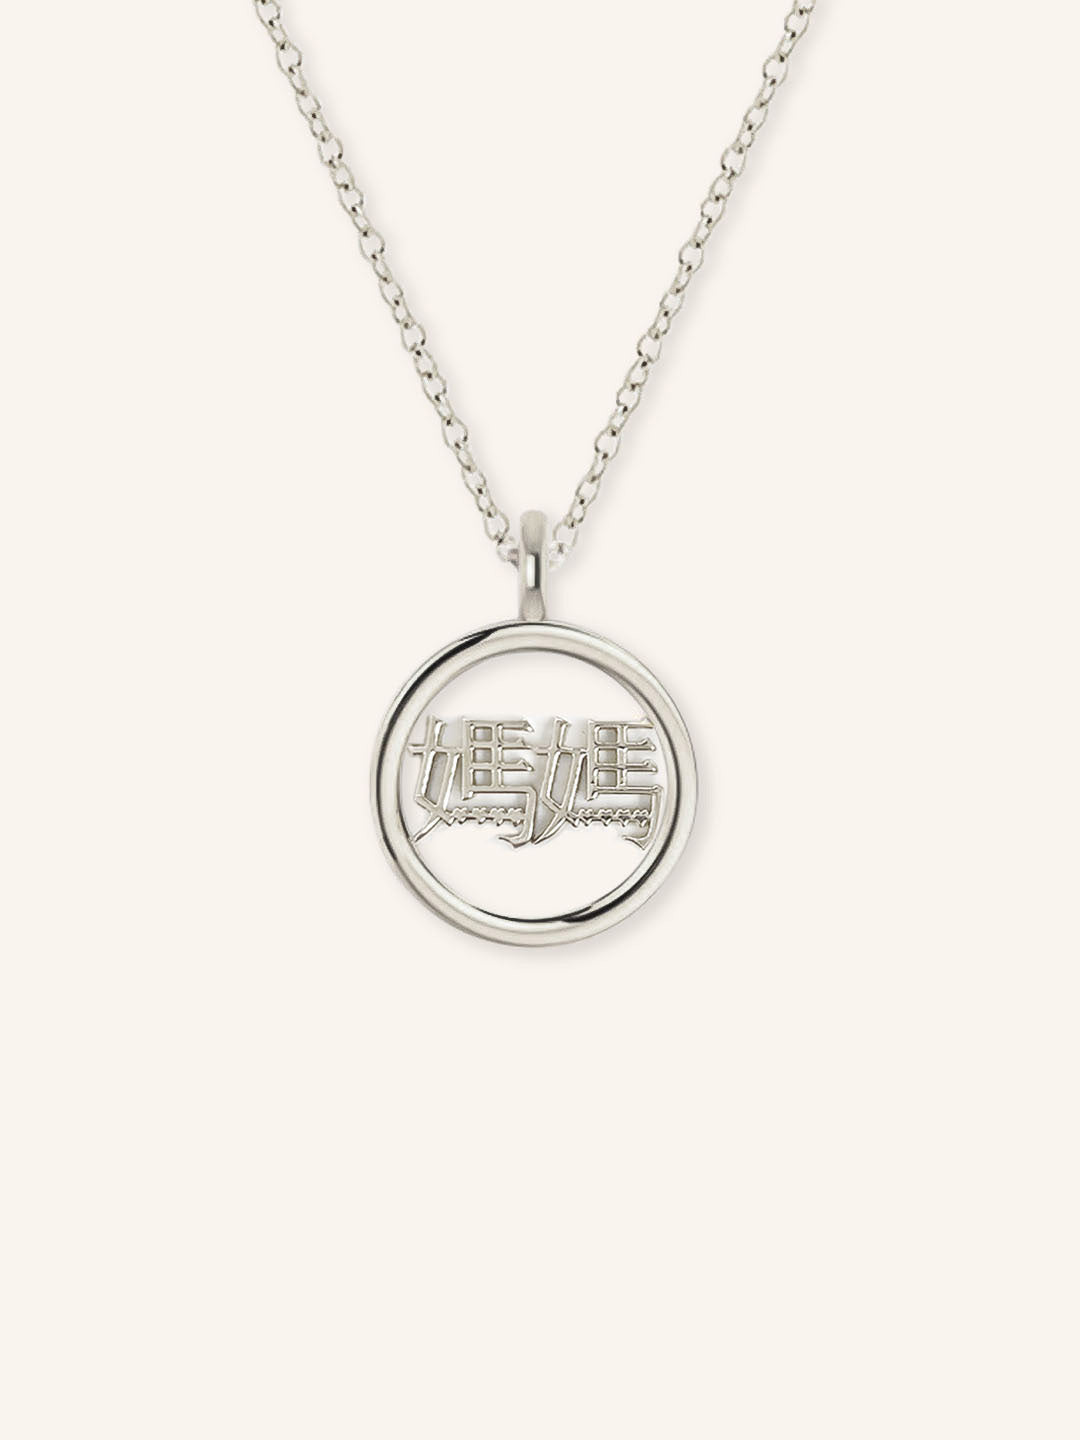 Chinese “Mama” 媽媽 Necklace